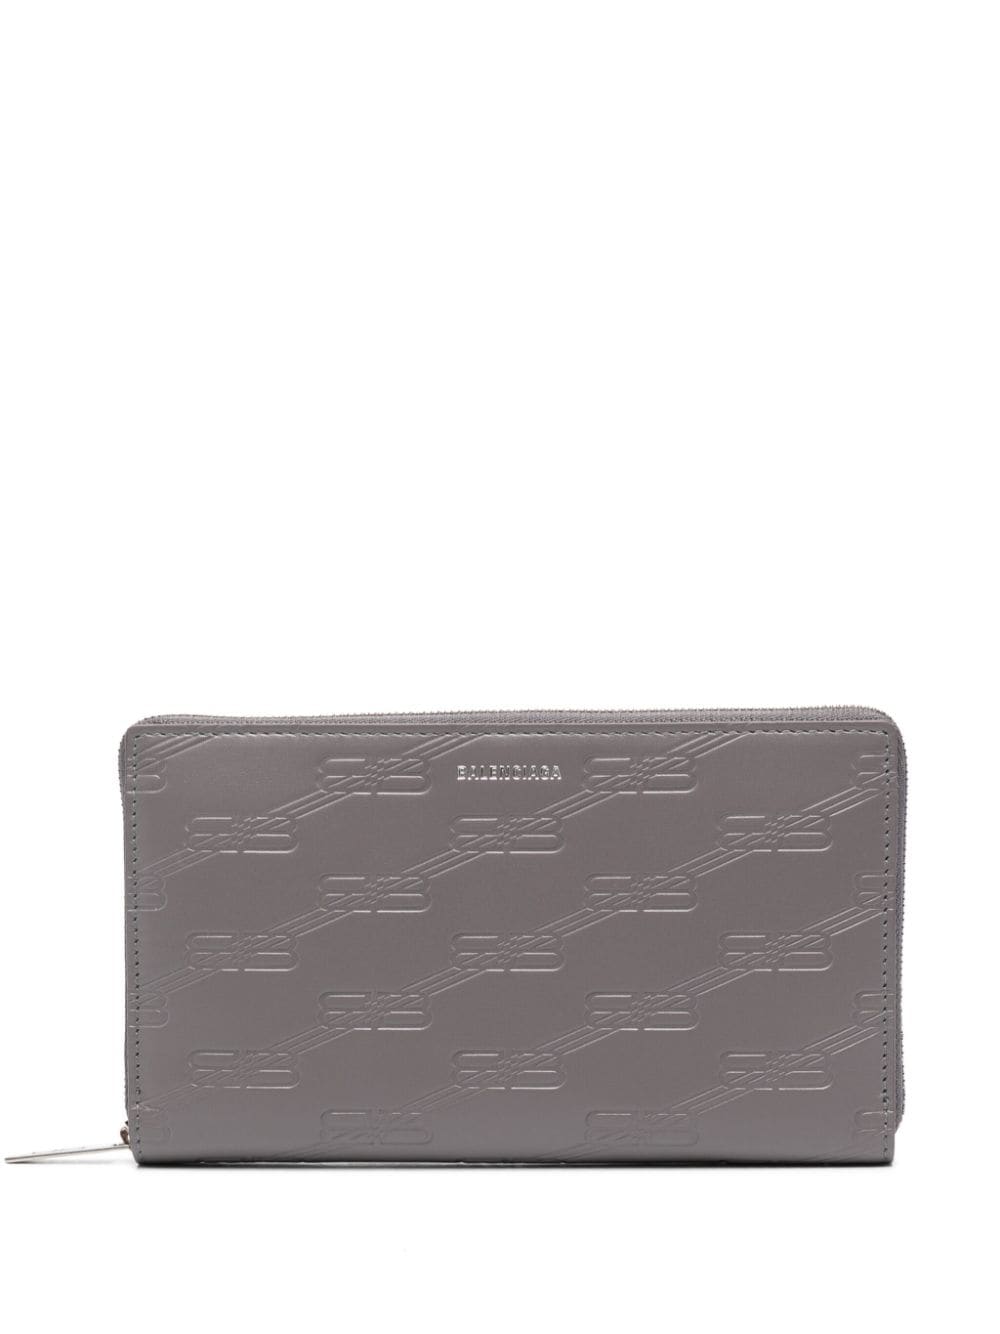 Balenciaga Embossed-logo Leather Wallet In Grey